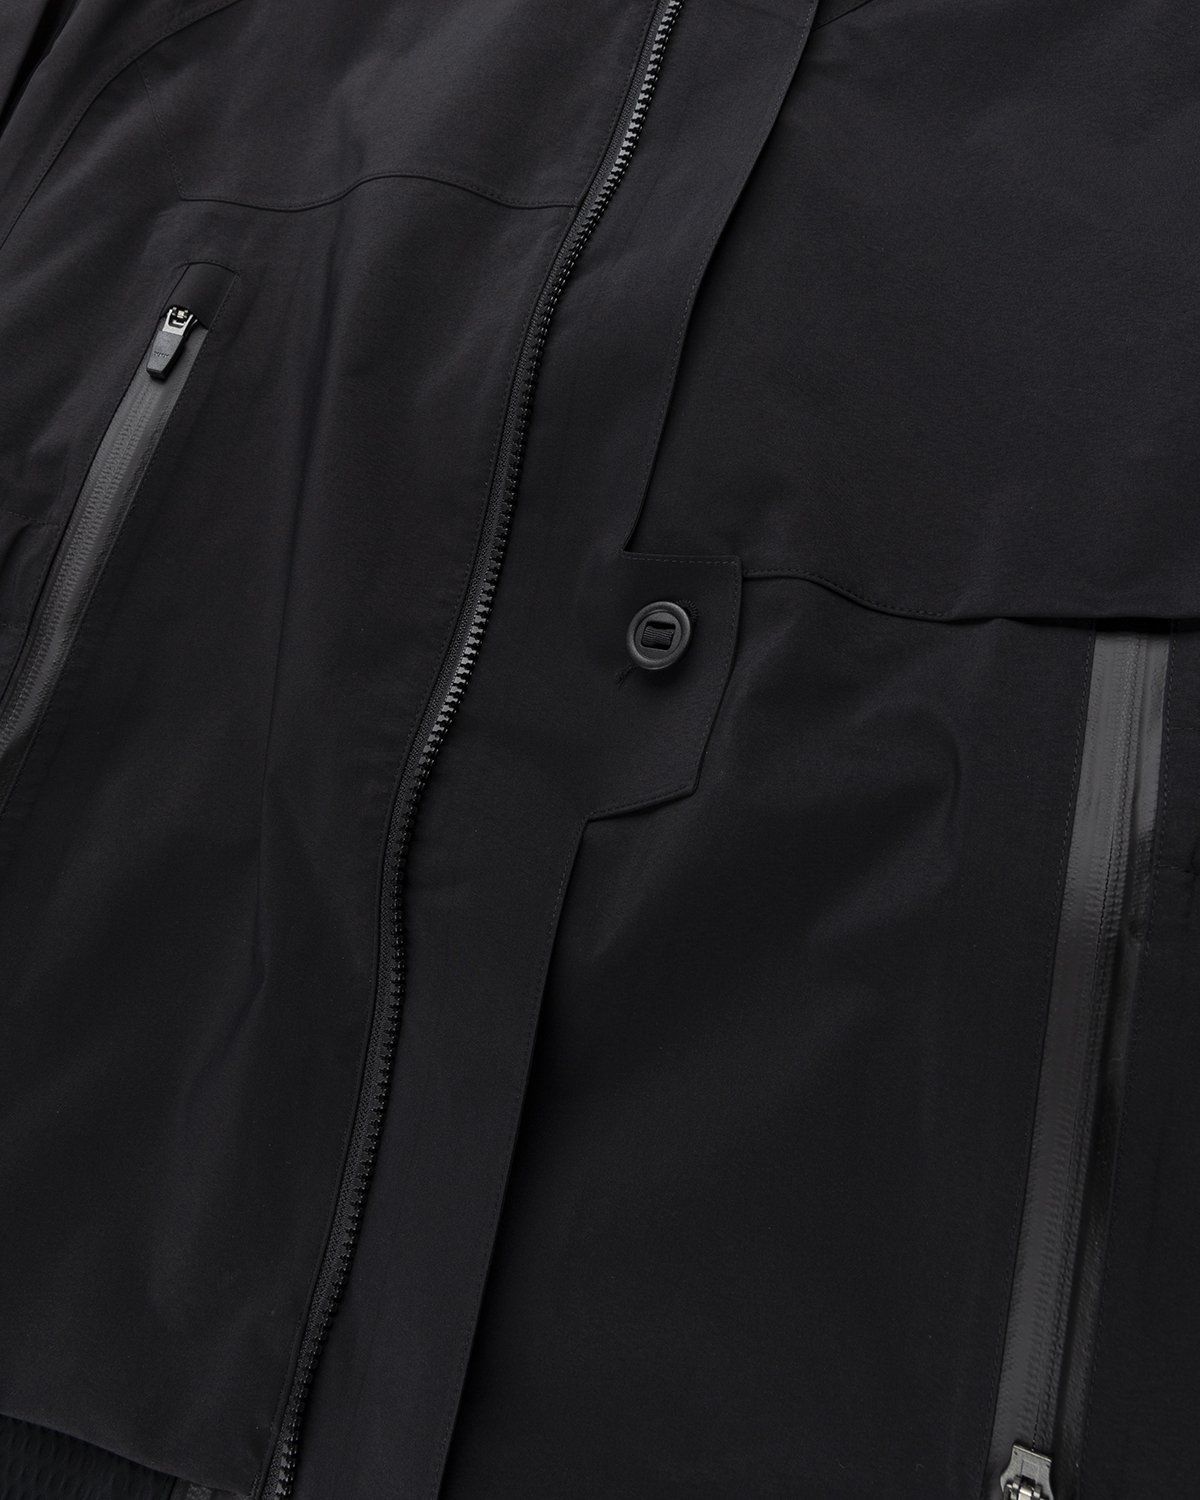 ACRONYM – J16-GT Jacket Black - Windbreakers - Black - Image 6